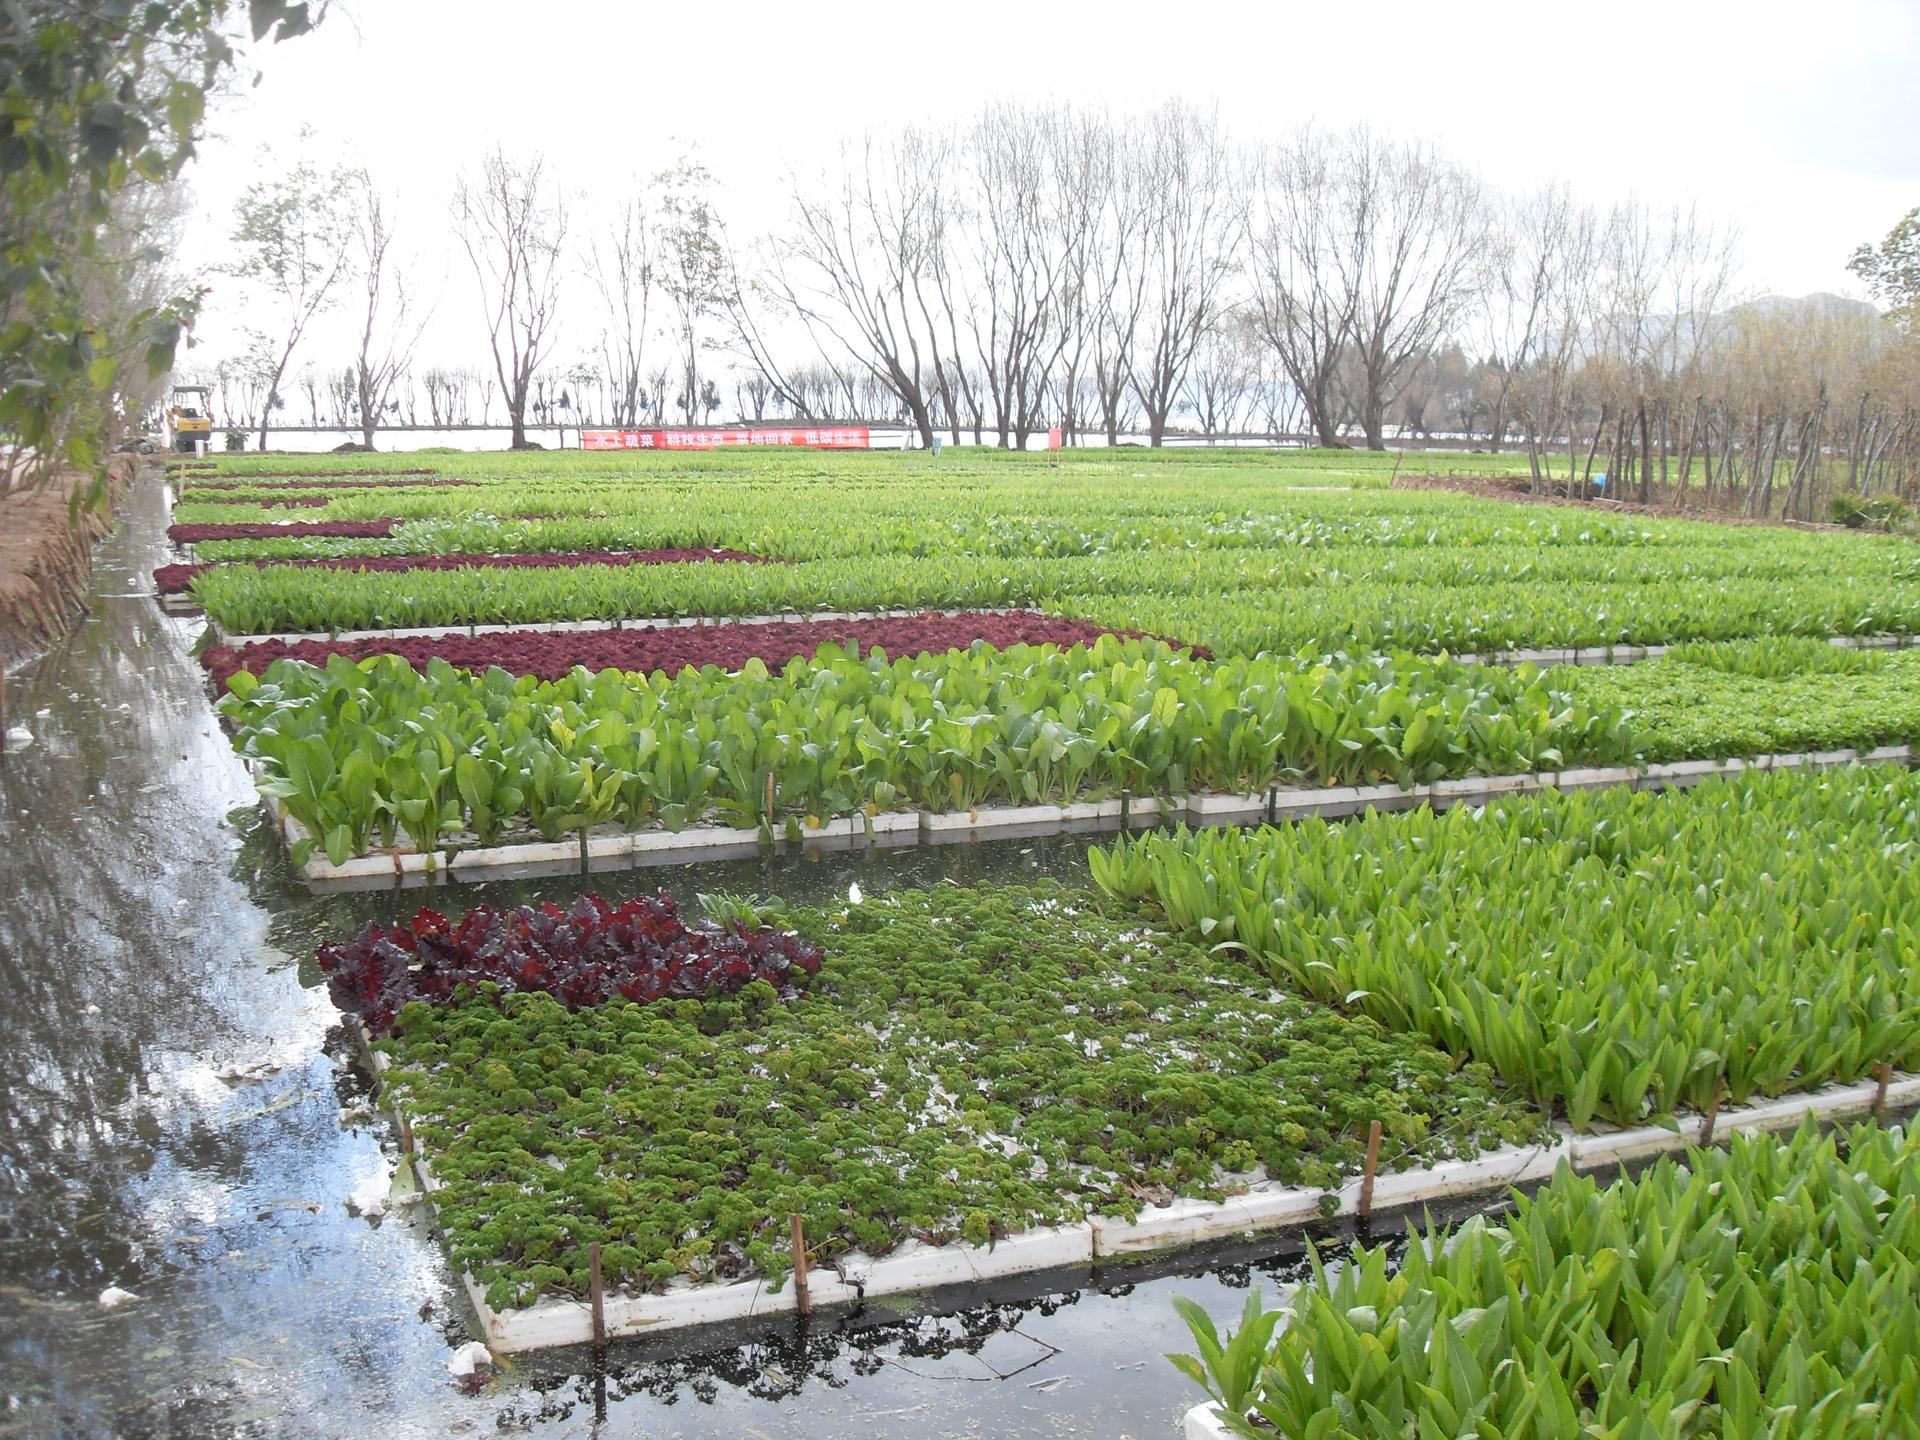 Hydroponic farm in China's Yunnan province